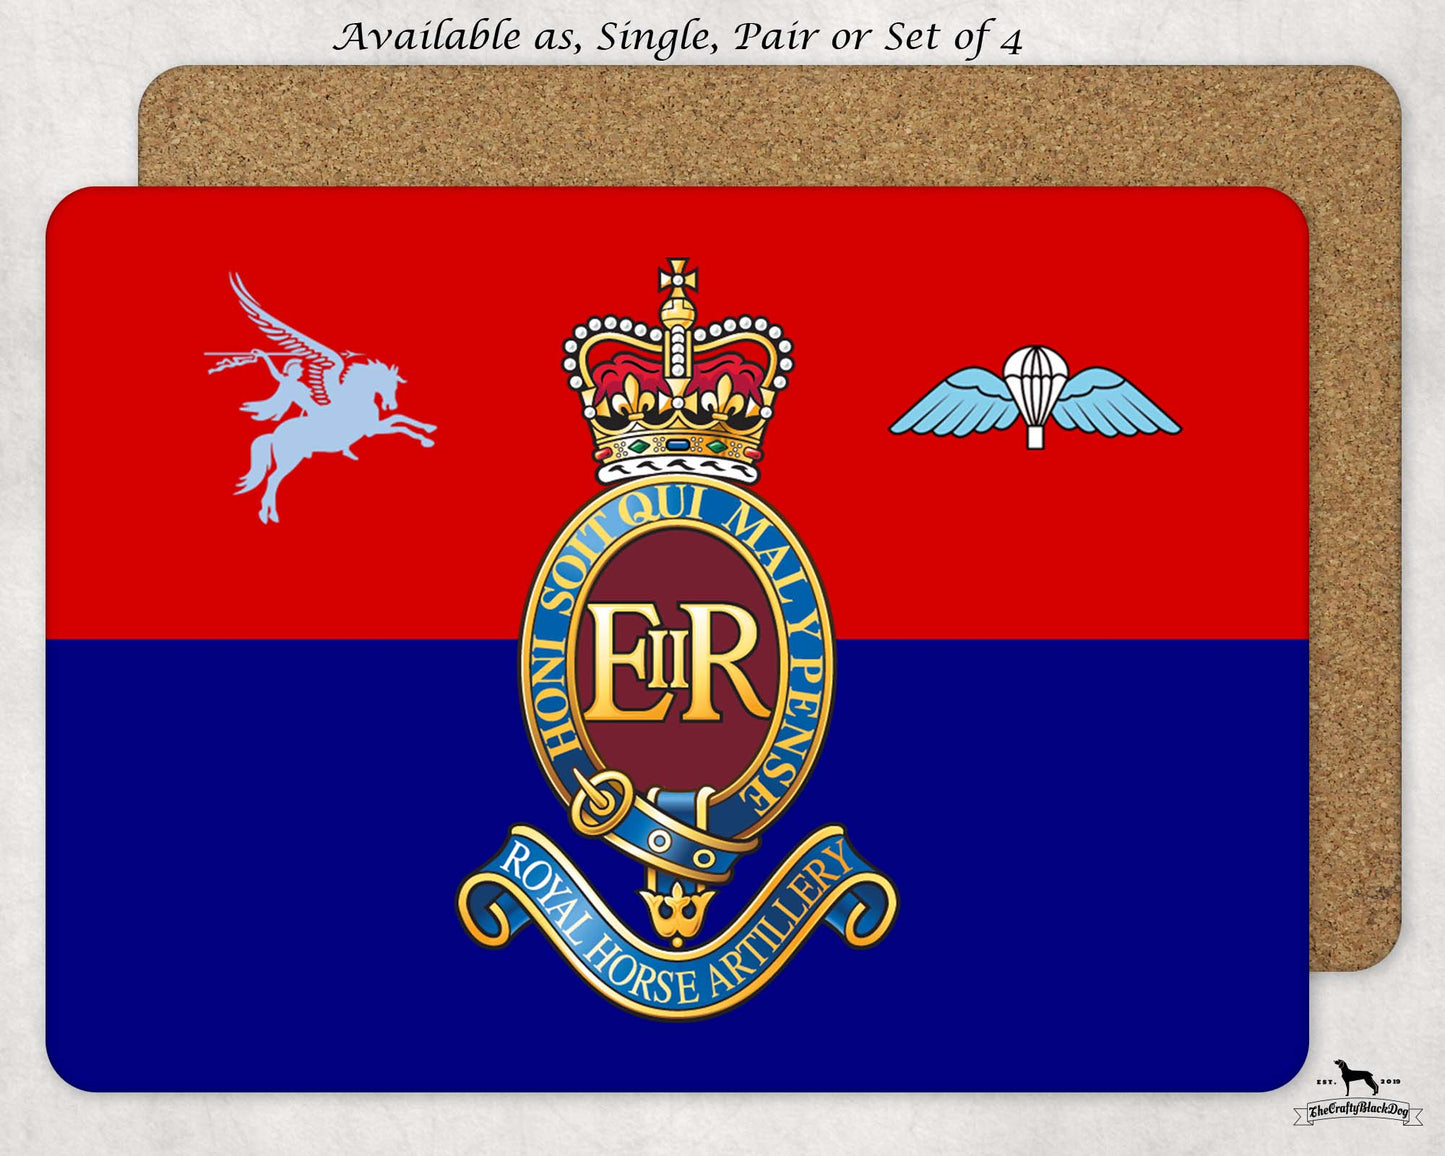 7 Para Royal Horse Artillery - Placemat(s)